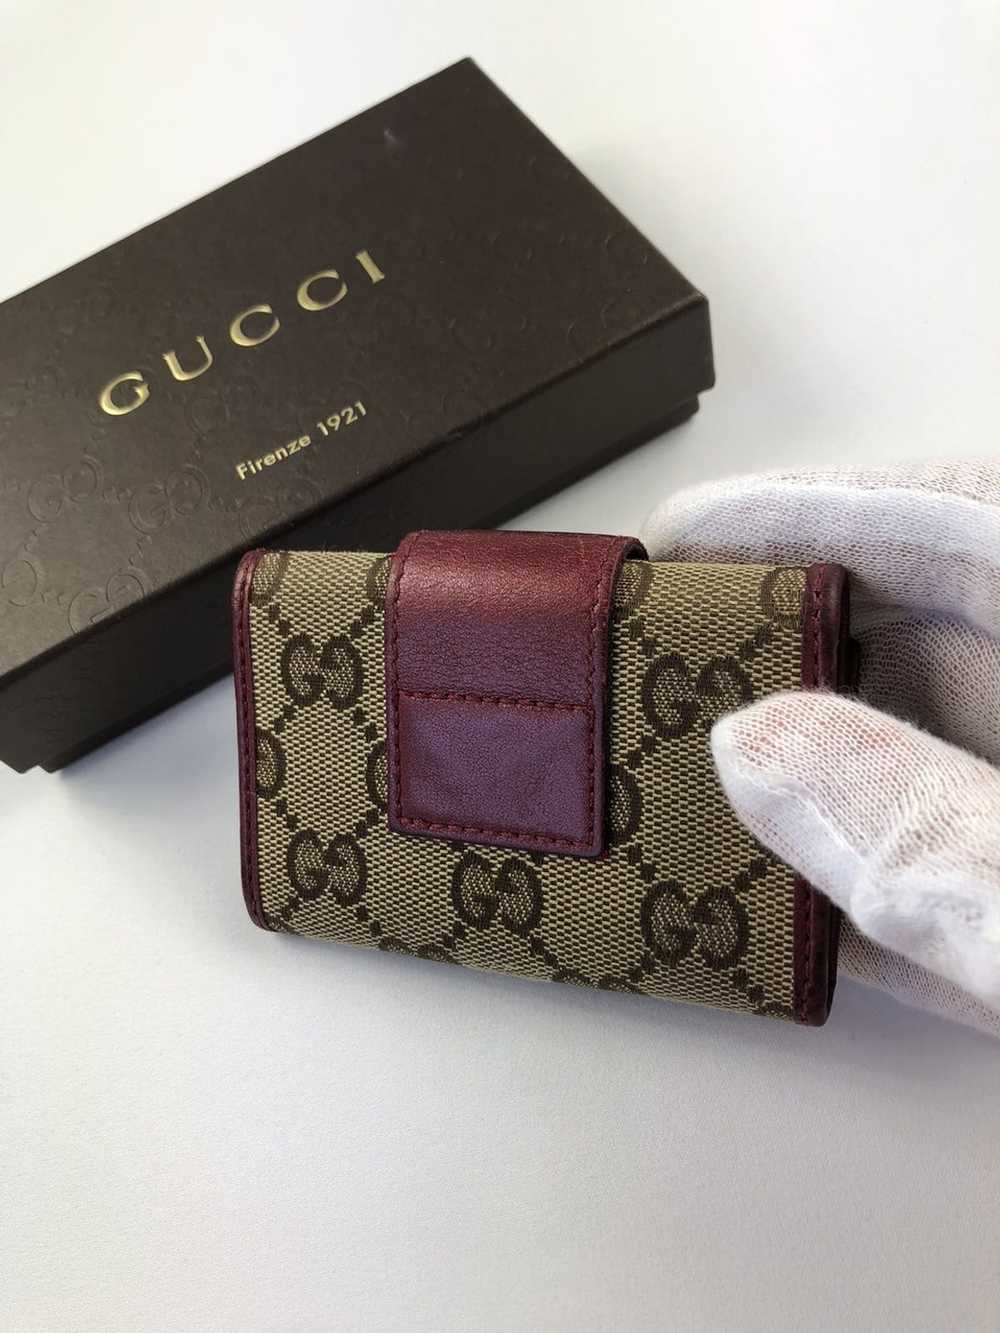 Gucci Gucci gg canvas monogram key holder - image 2